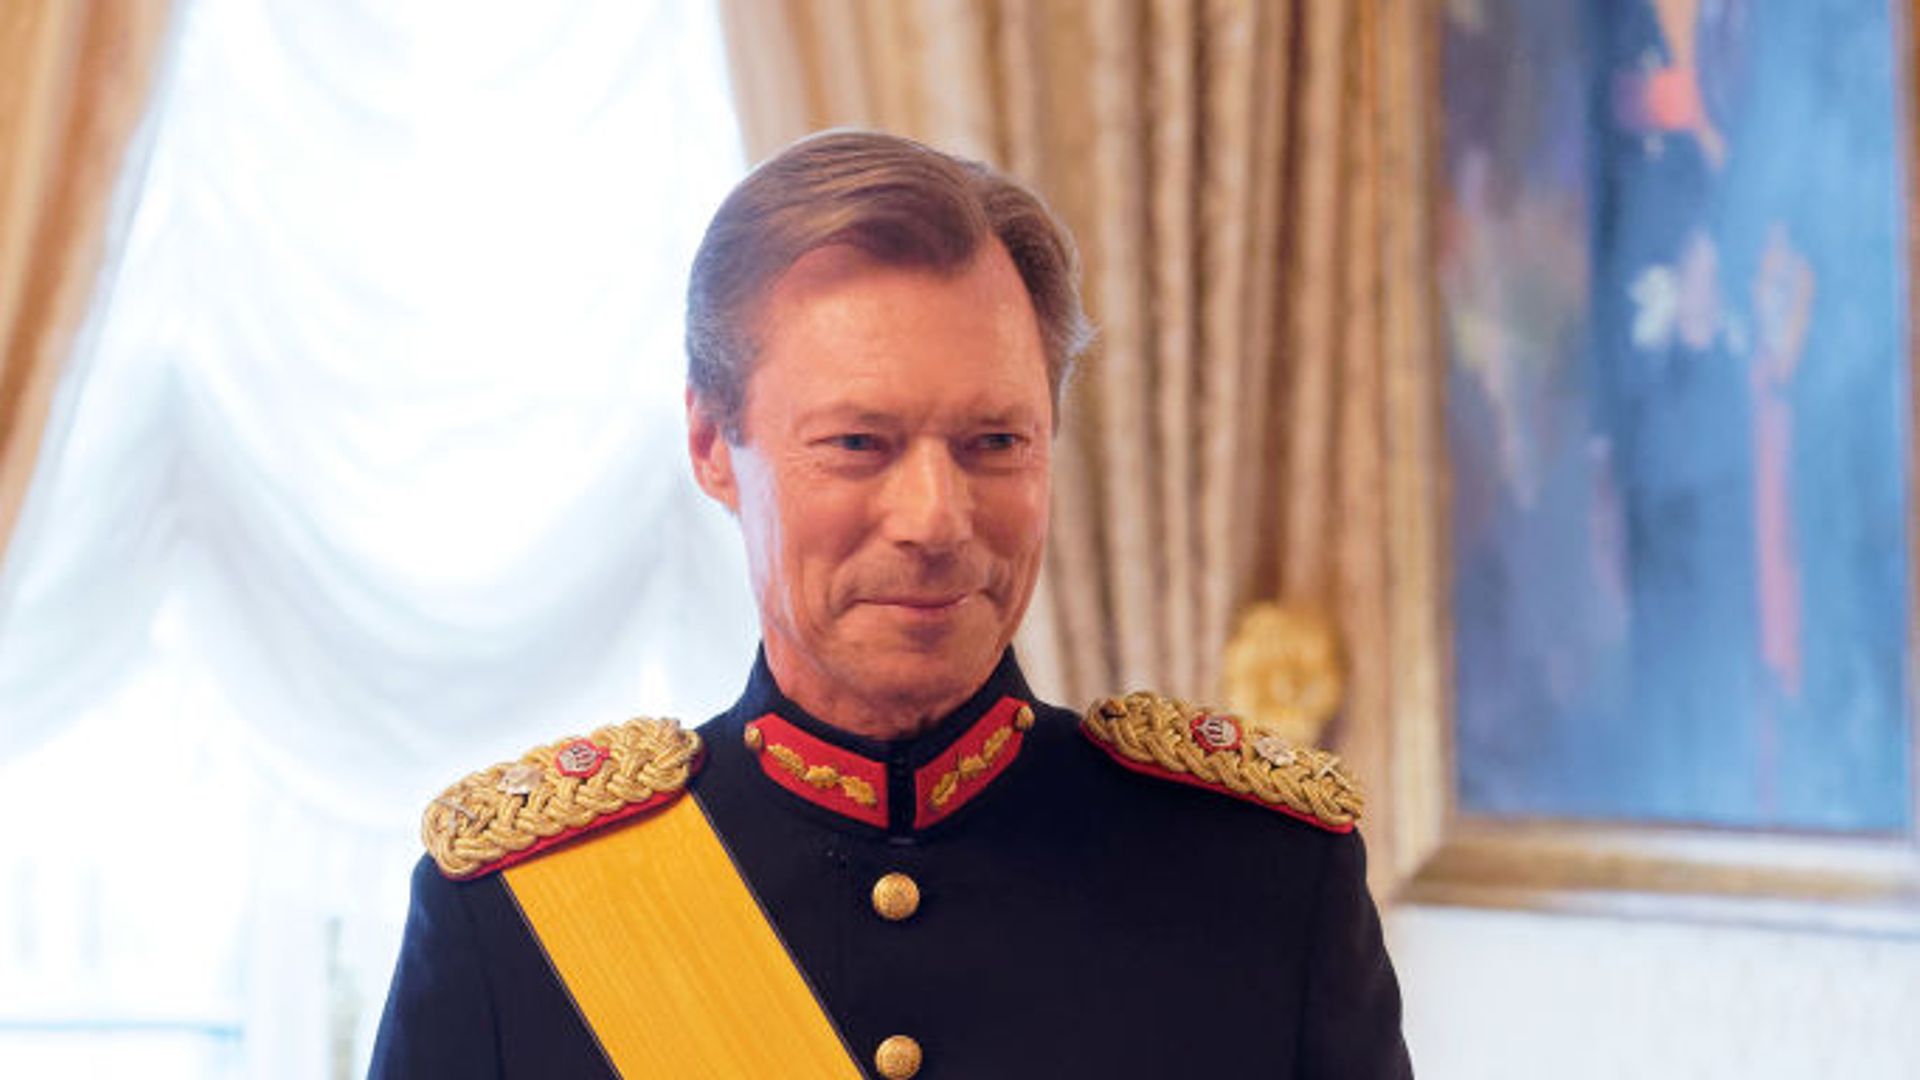 Grand Duke Henri of Luxembourg - Biography